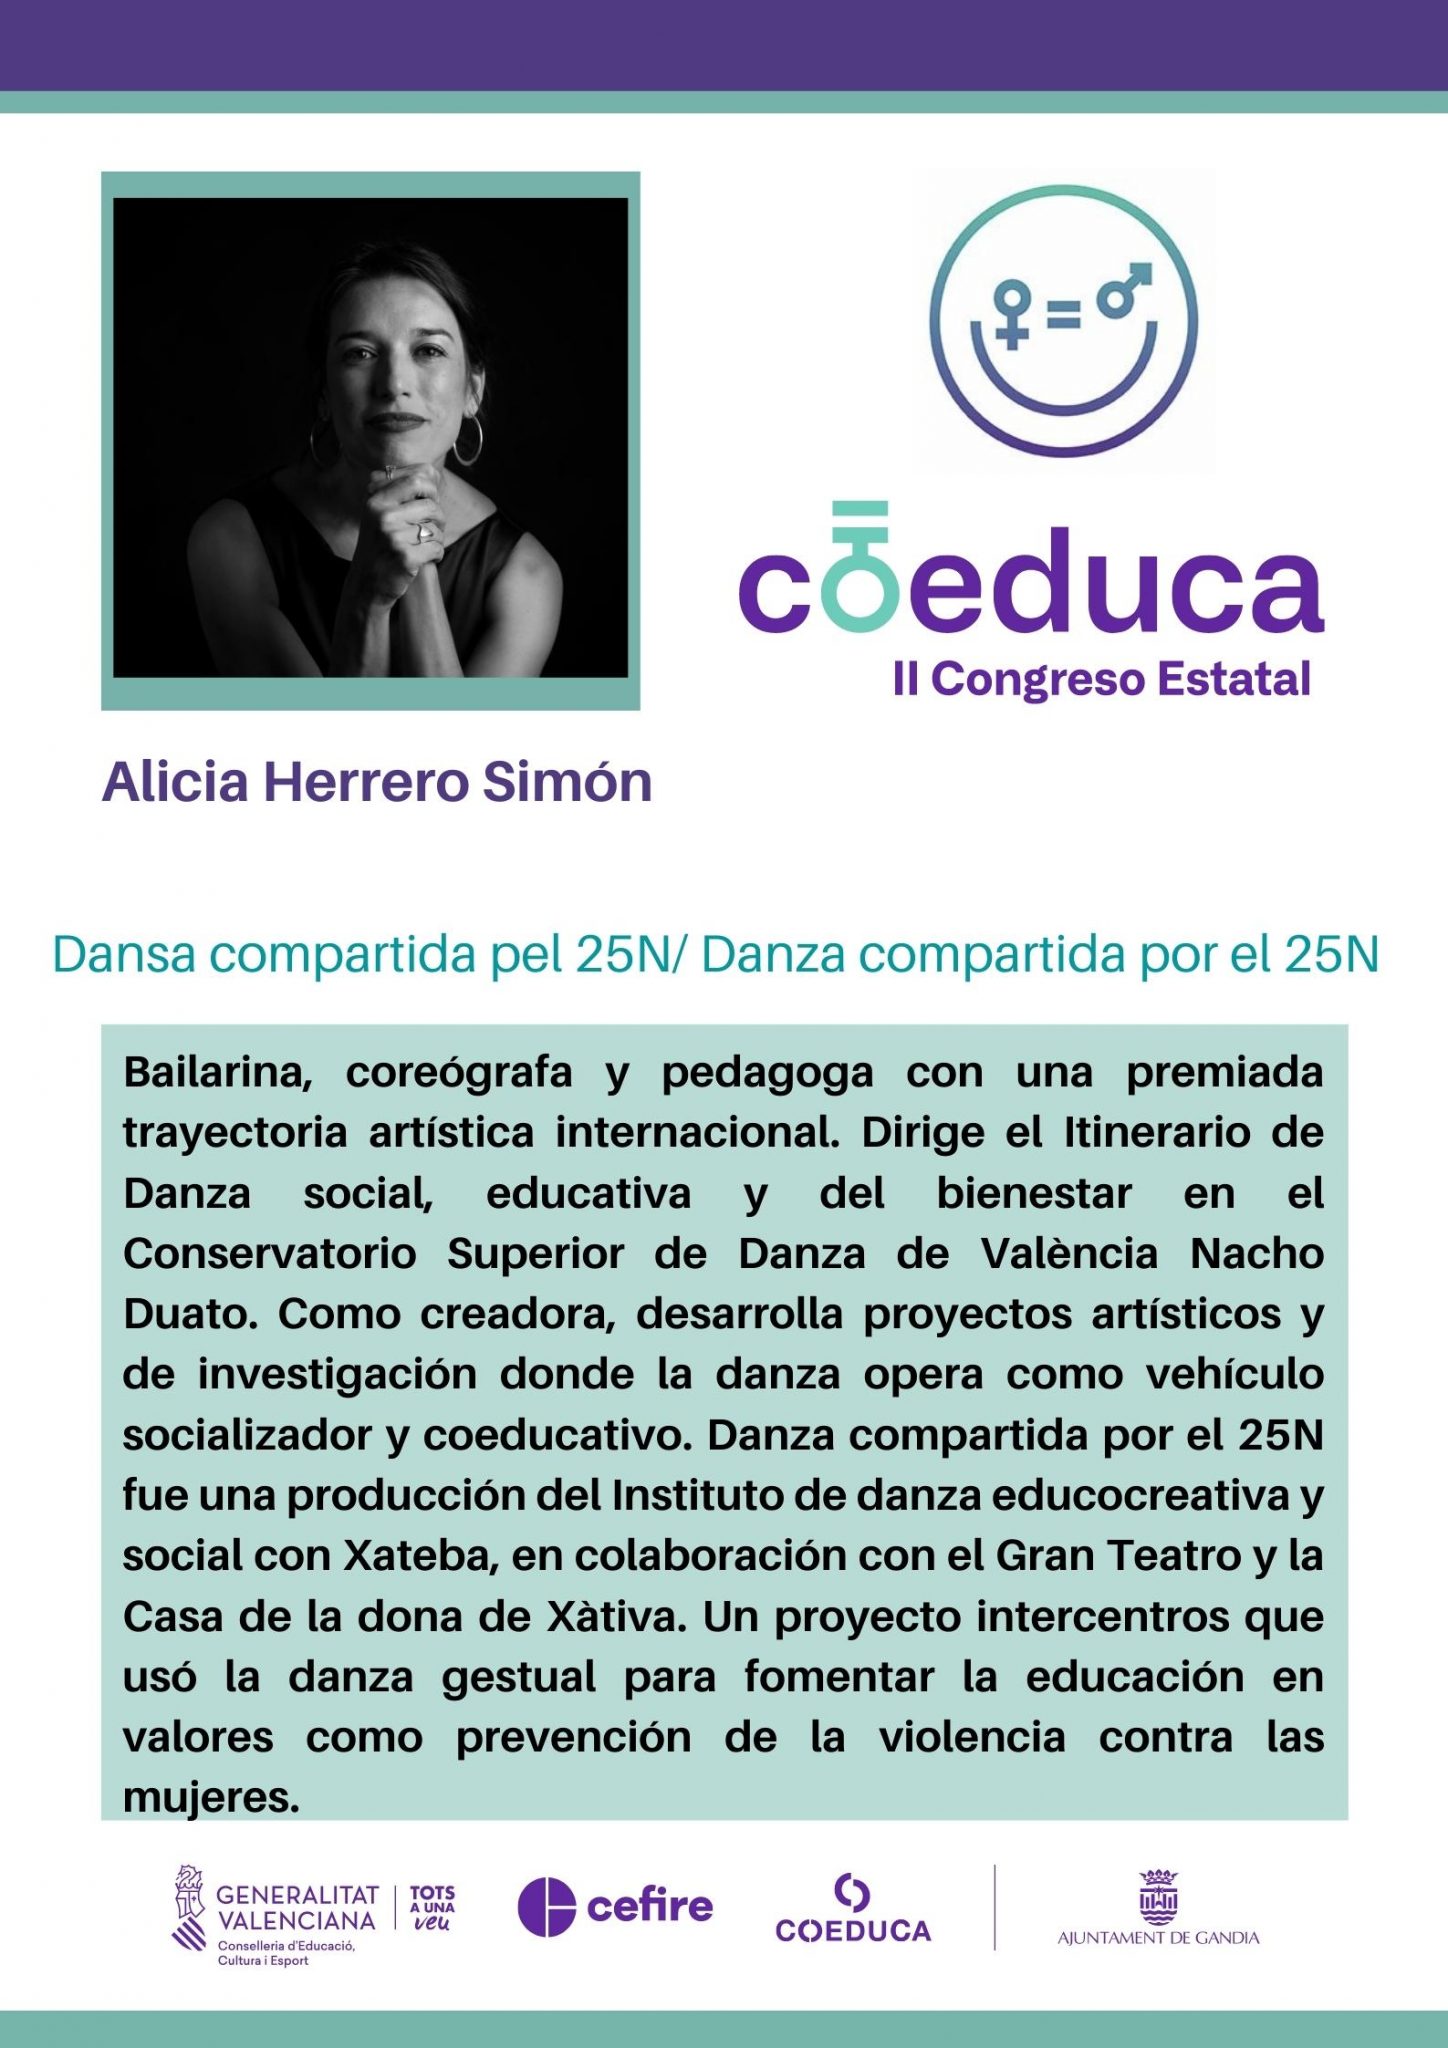 Alicia Herrero Simón